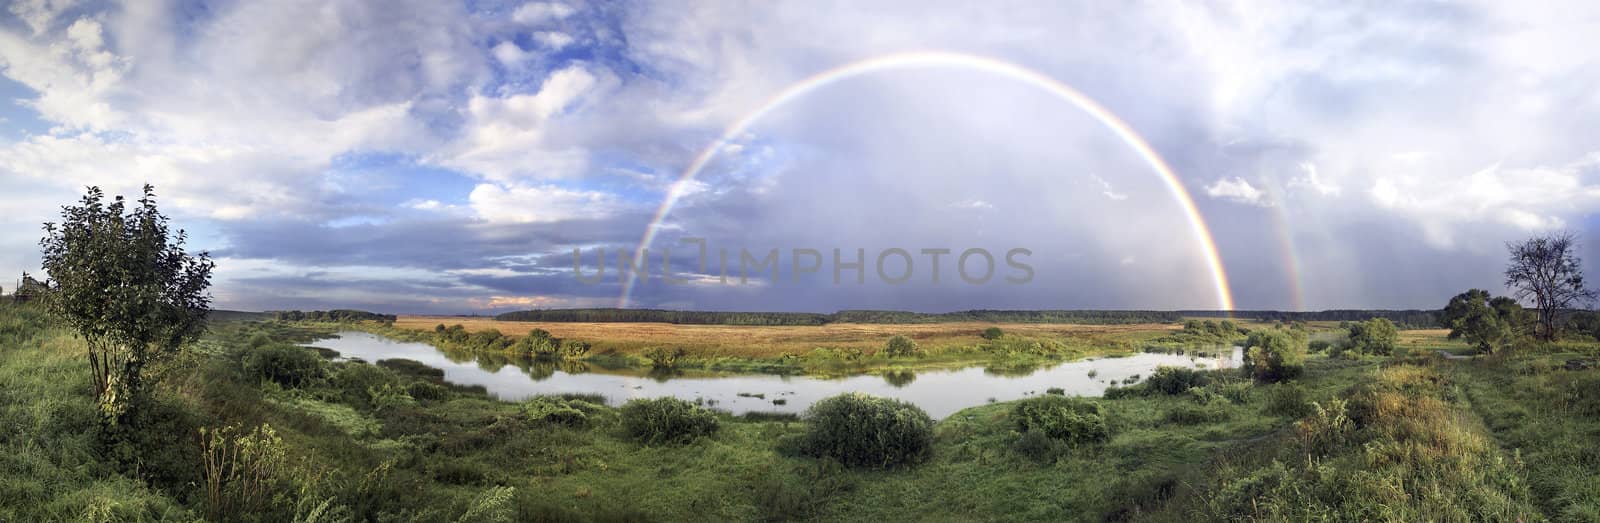 Rainbow on wood after rain by AlexKhrom